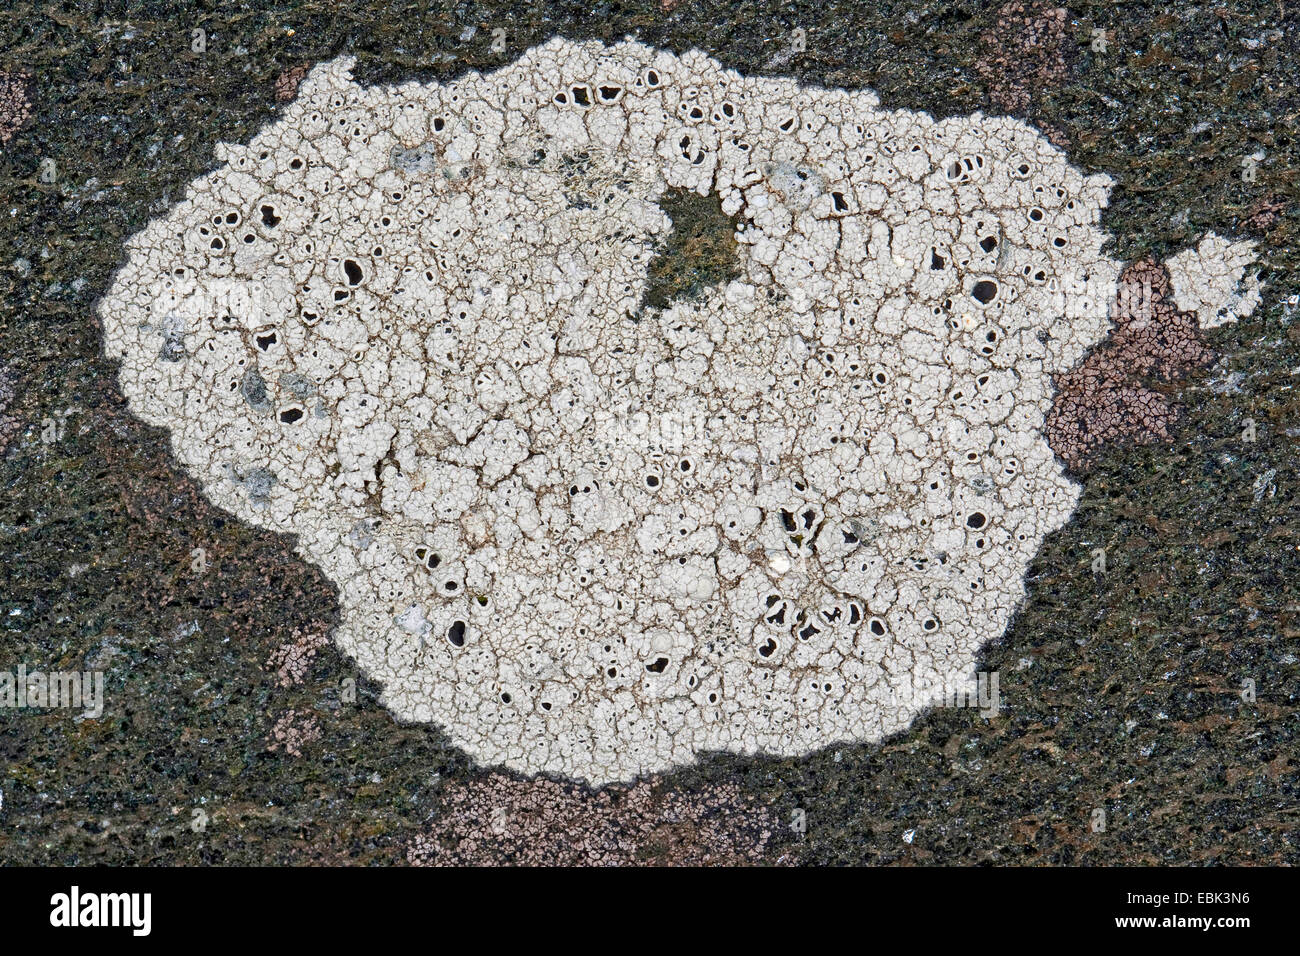 Escudos de negro (Tephromela Liquen Lecanora, sinónimo de atra atra), en la costa de rocas, Alemania Foto de stock